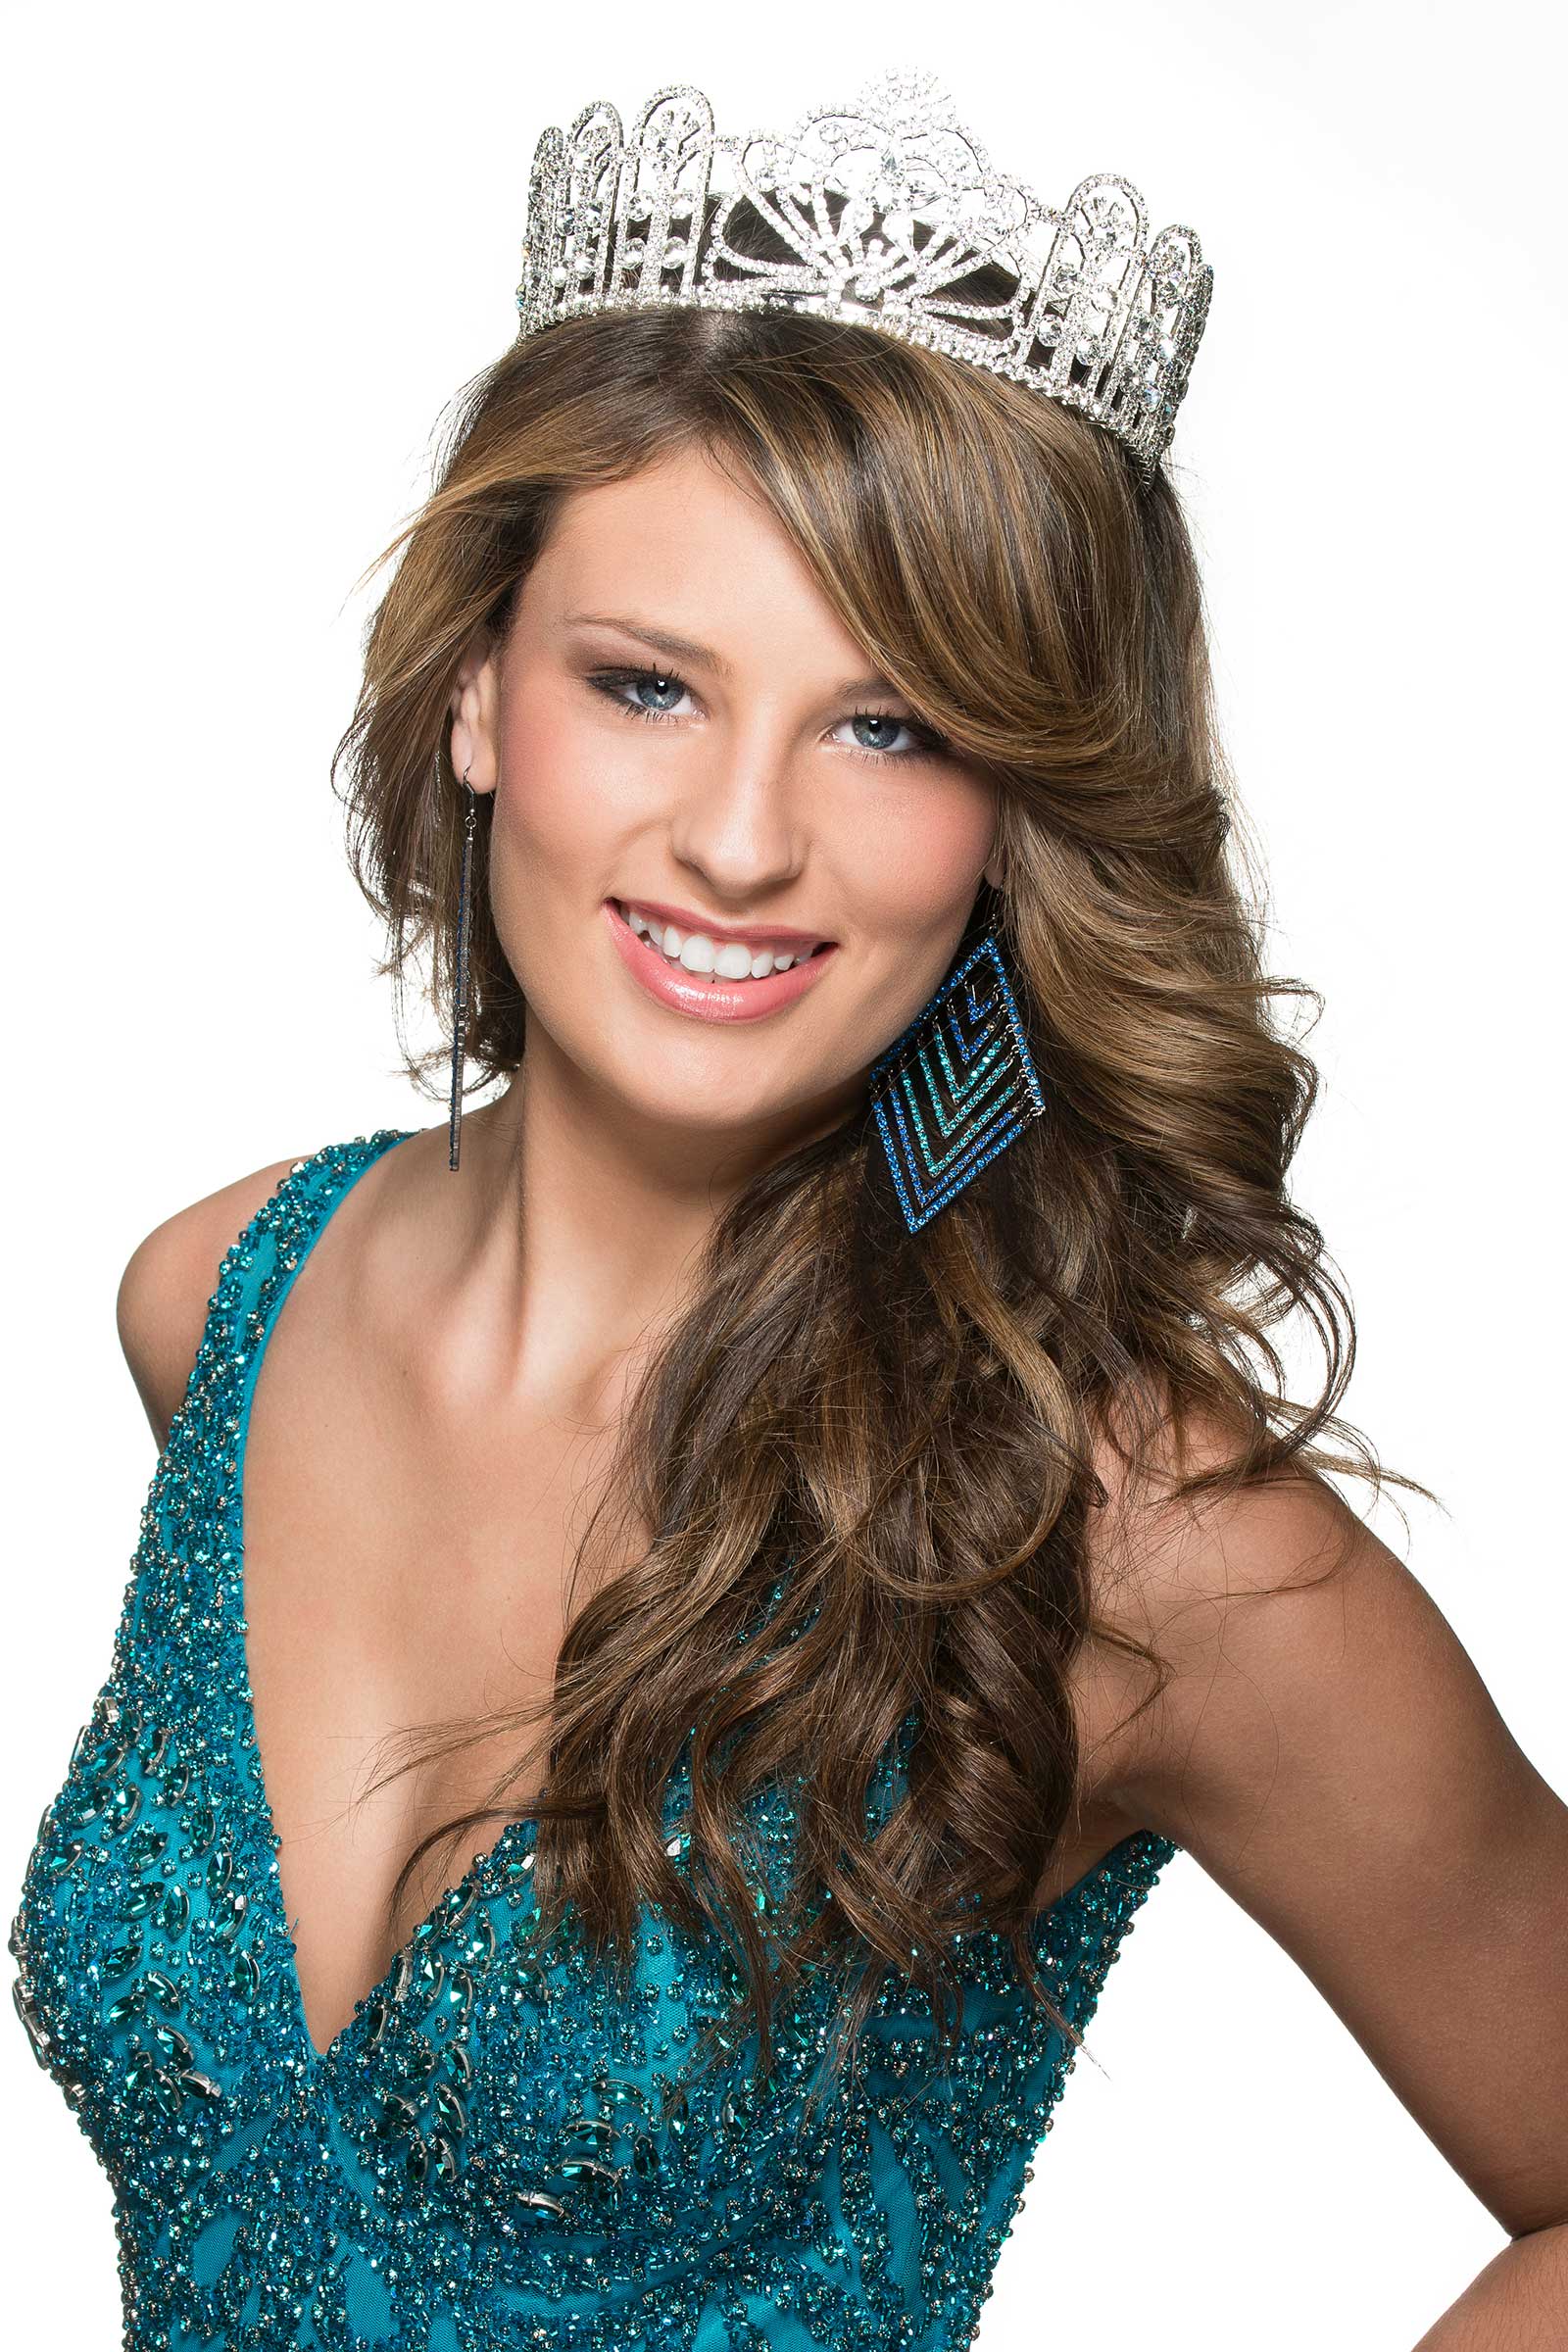 Houma resident represents state as Miss Louisiana Teen USA